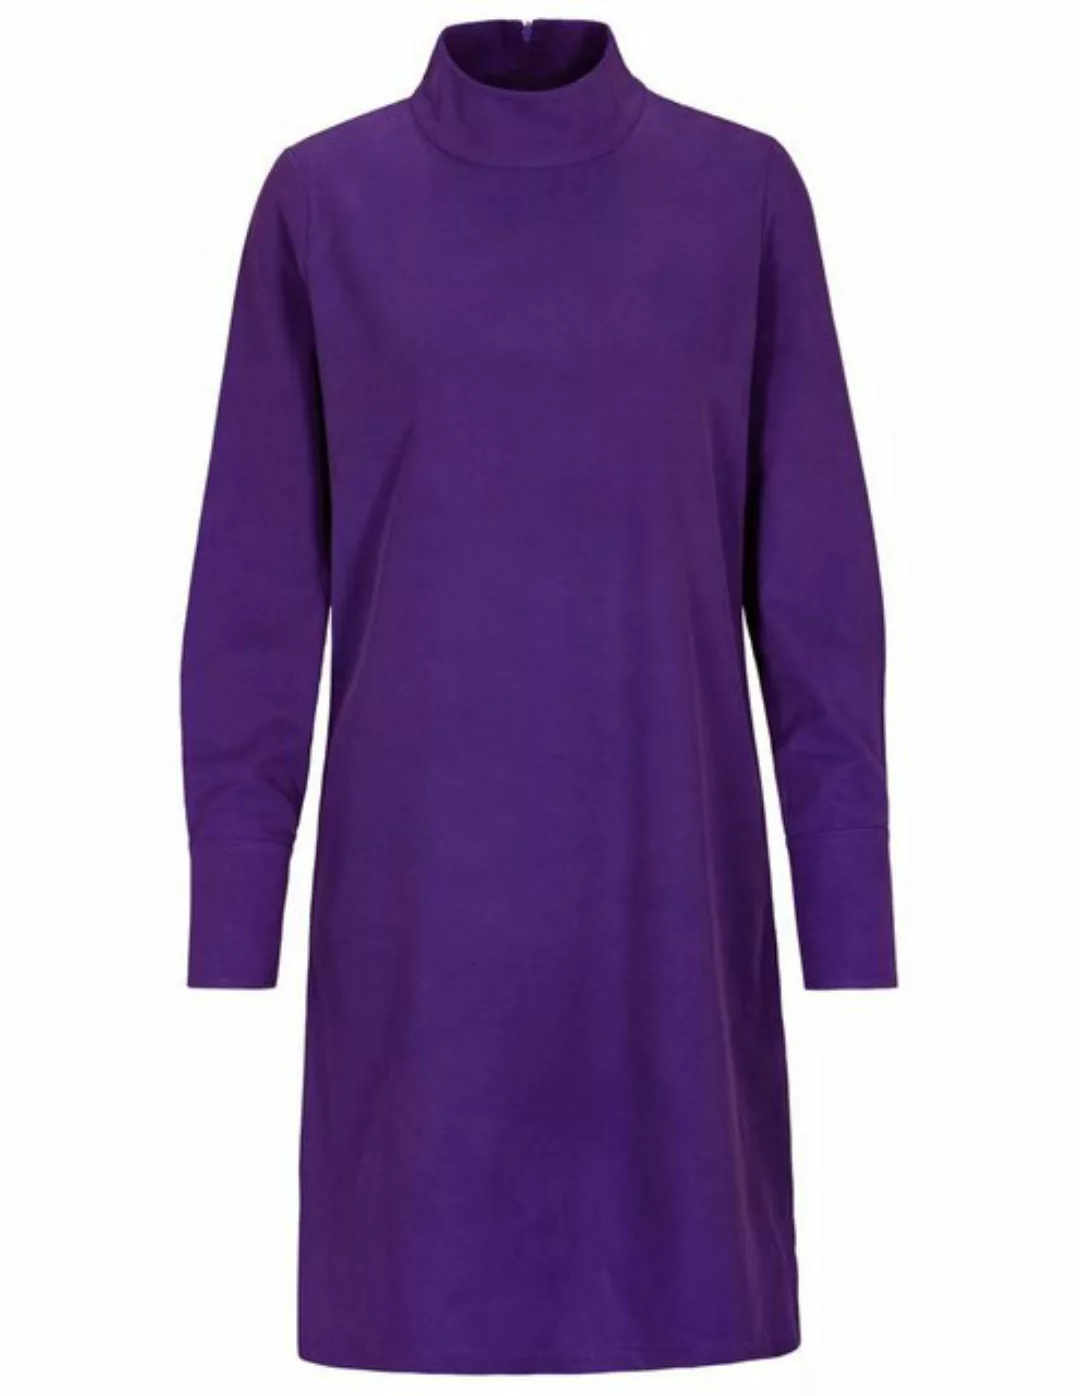 THE FASHION PEOPLE Midikleid Dress Tencel solid günstig online kaufen